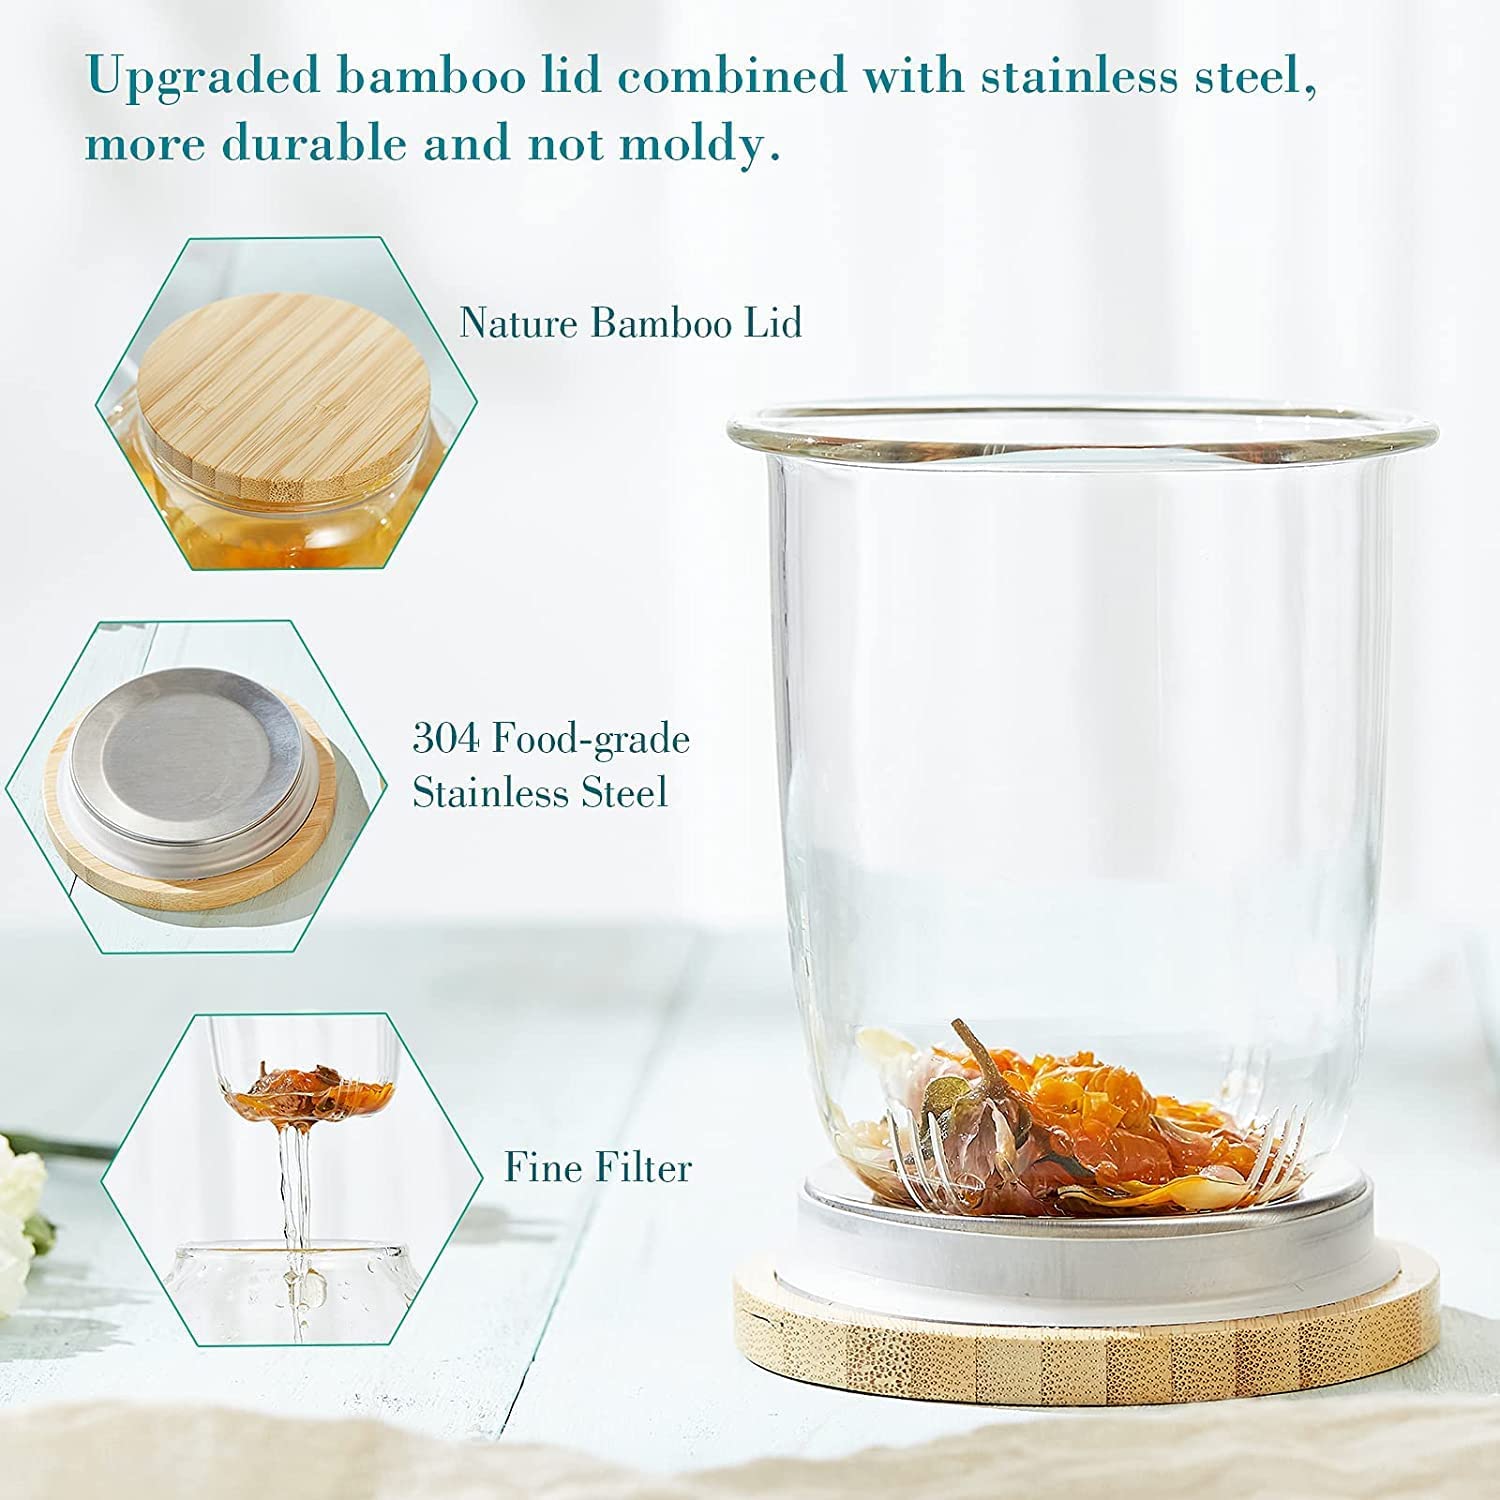 Bonjour Tea Handblown Glass Zen Teapot with Stainless Steel Infuser and Bamboo Trivet, 34-Ounce